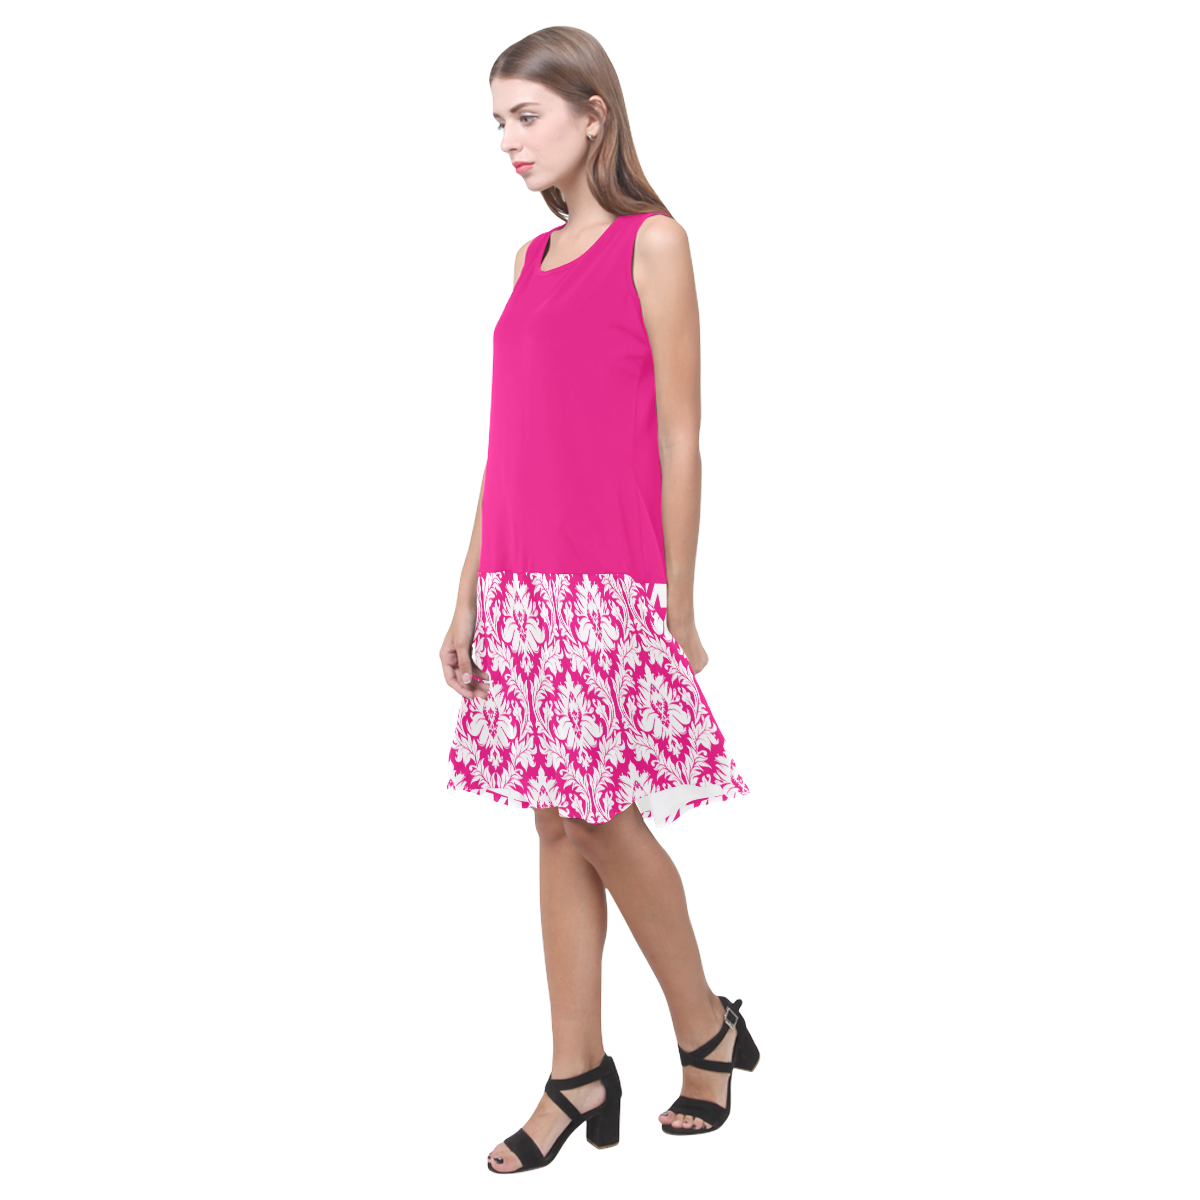 damask pattern hot pink and white Sleeveless Splicing Shift Dress(Model D17)